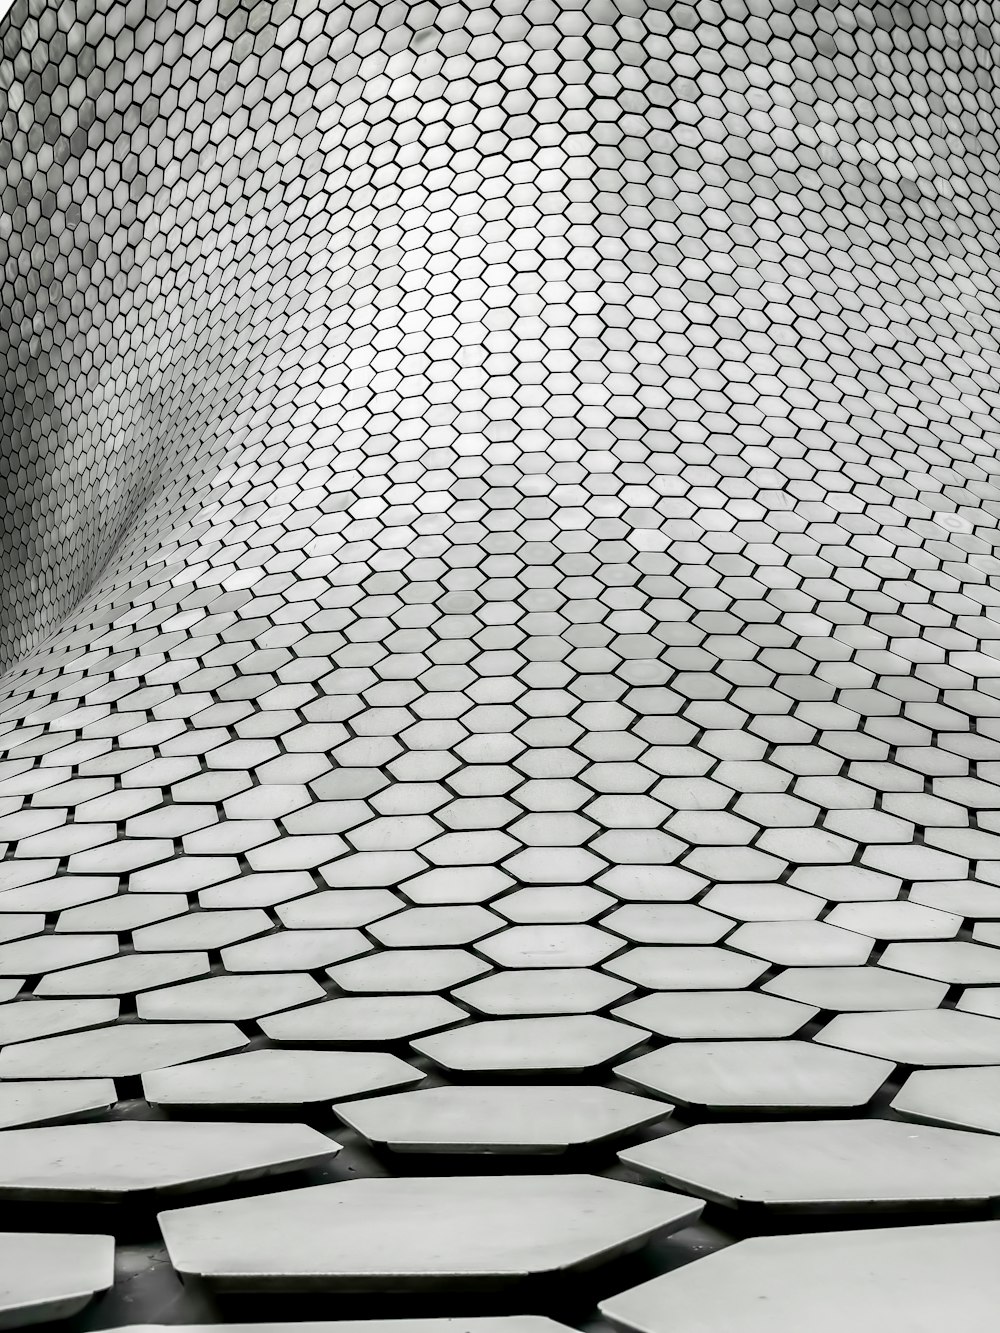 a black and white photo of hexagonal tiles